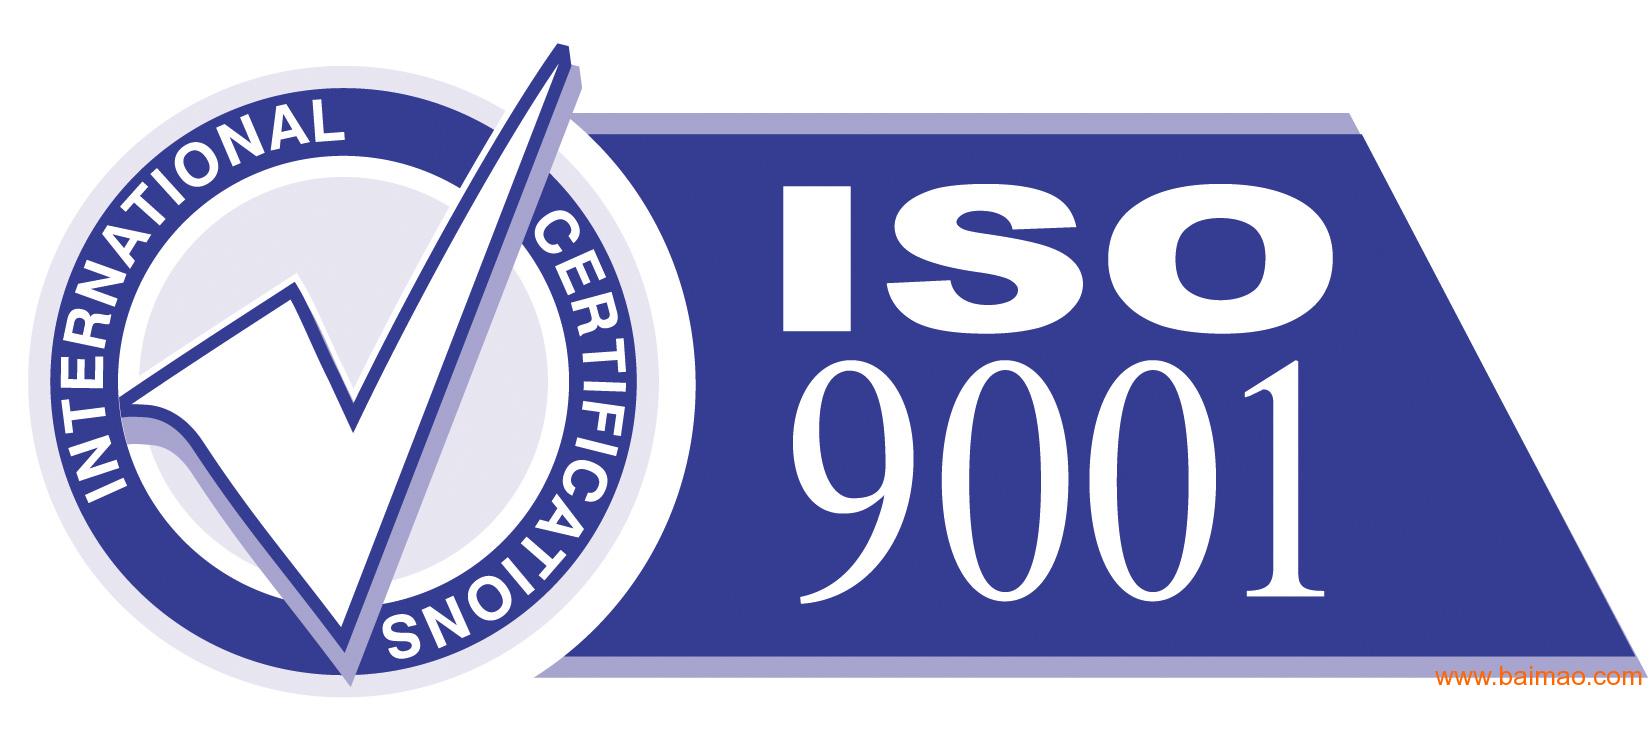 佛山iso9001认证换证怎么办理